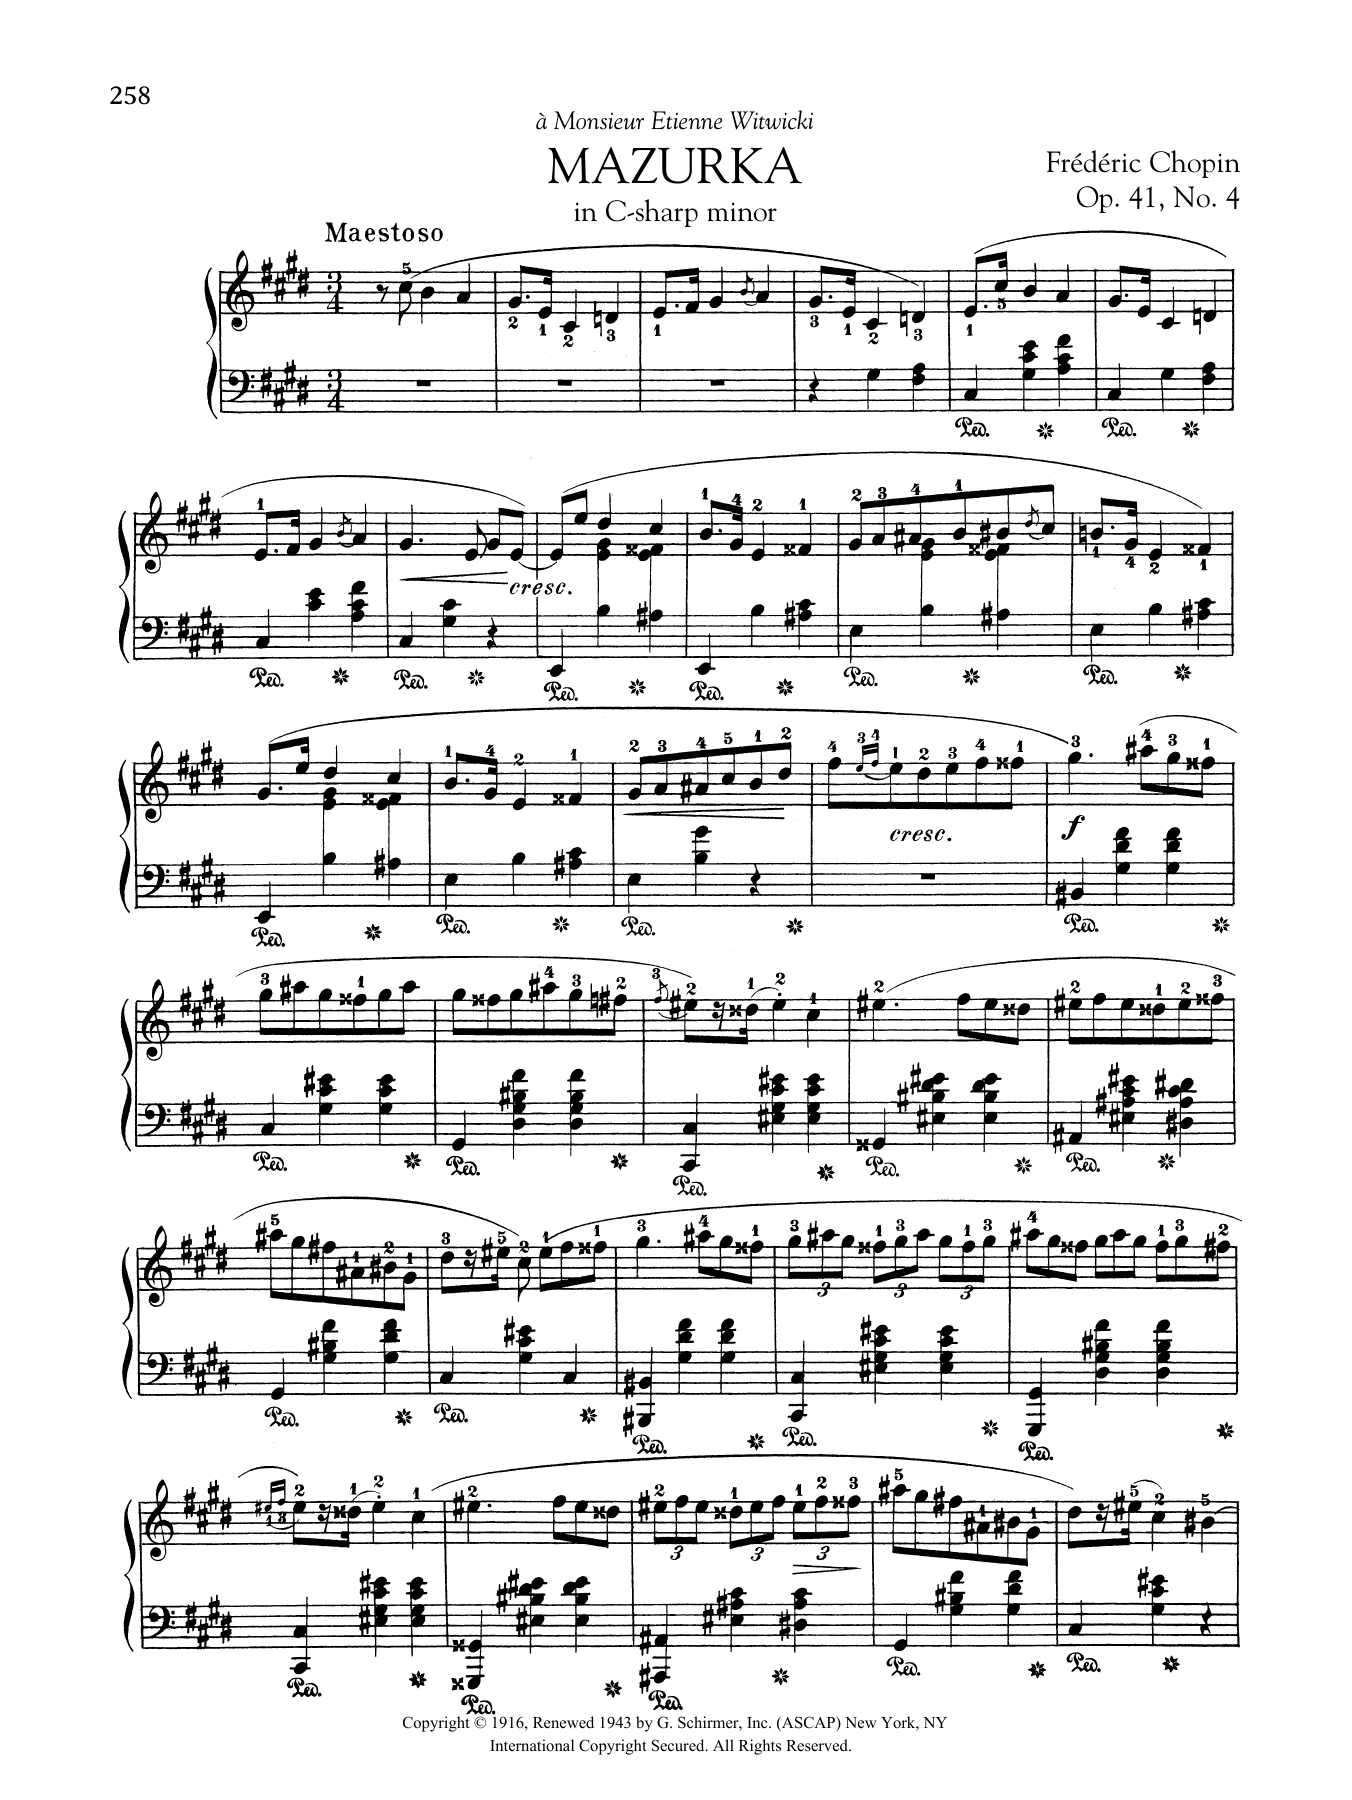 Download Frederic Chopin Mazurka in C-sharp minor, Op. 41, No. 4 Sheet Music